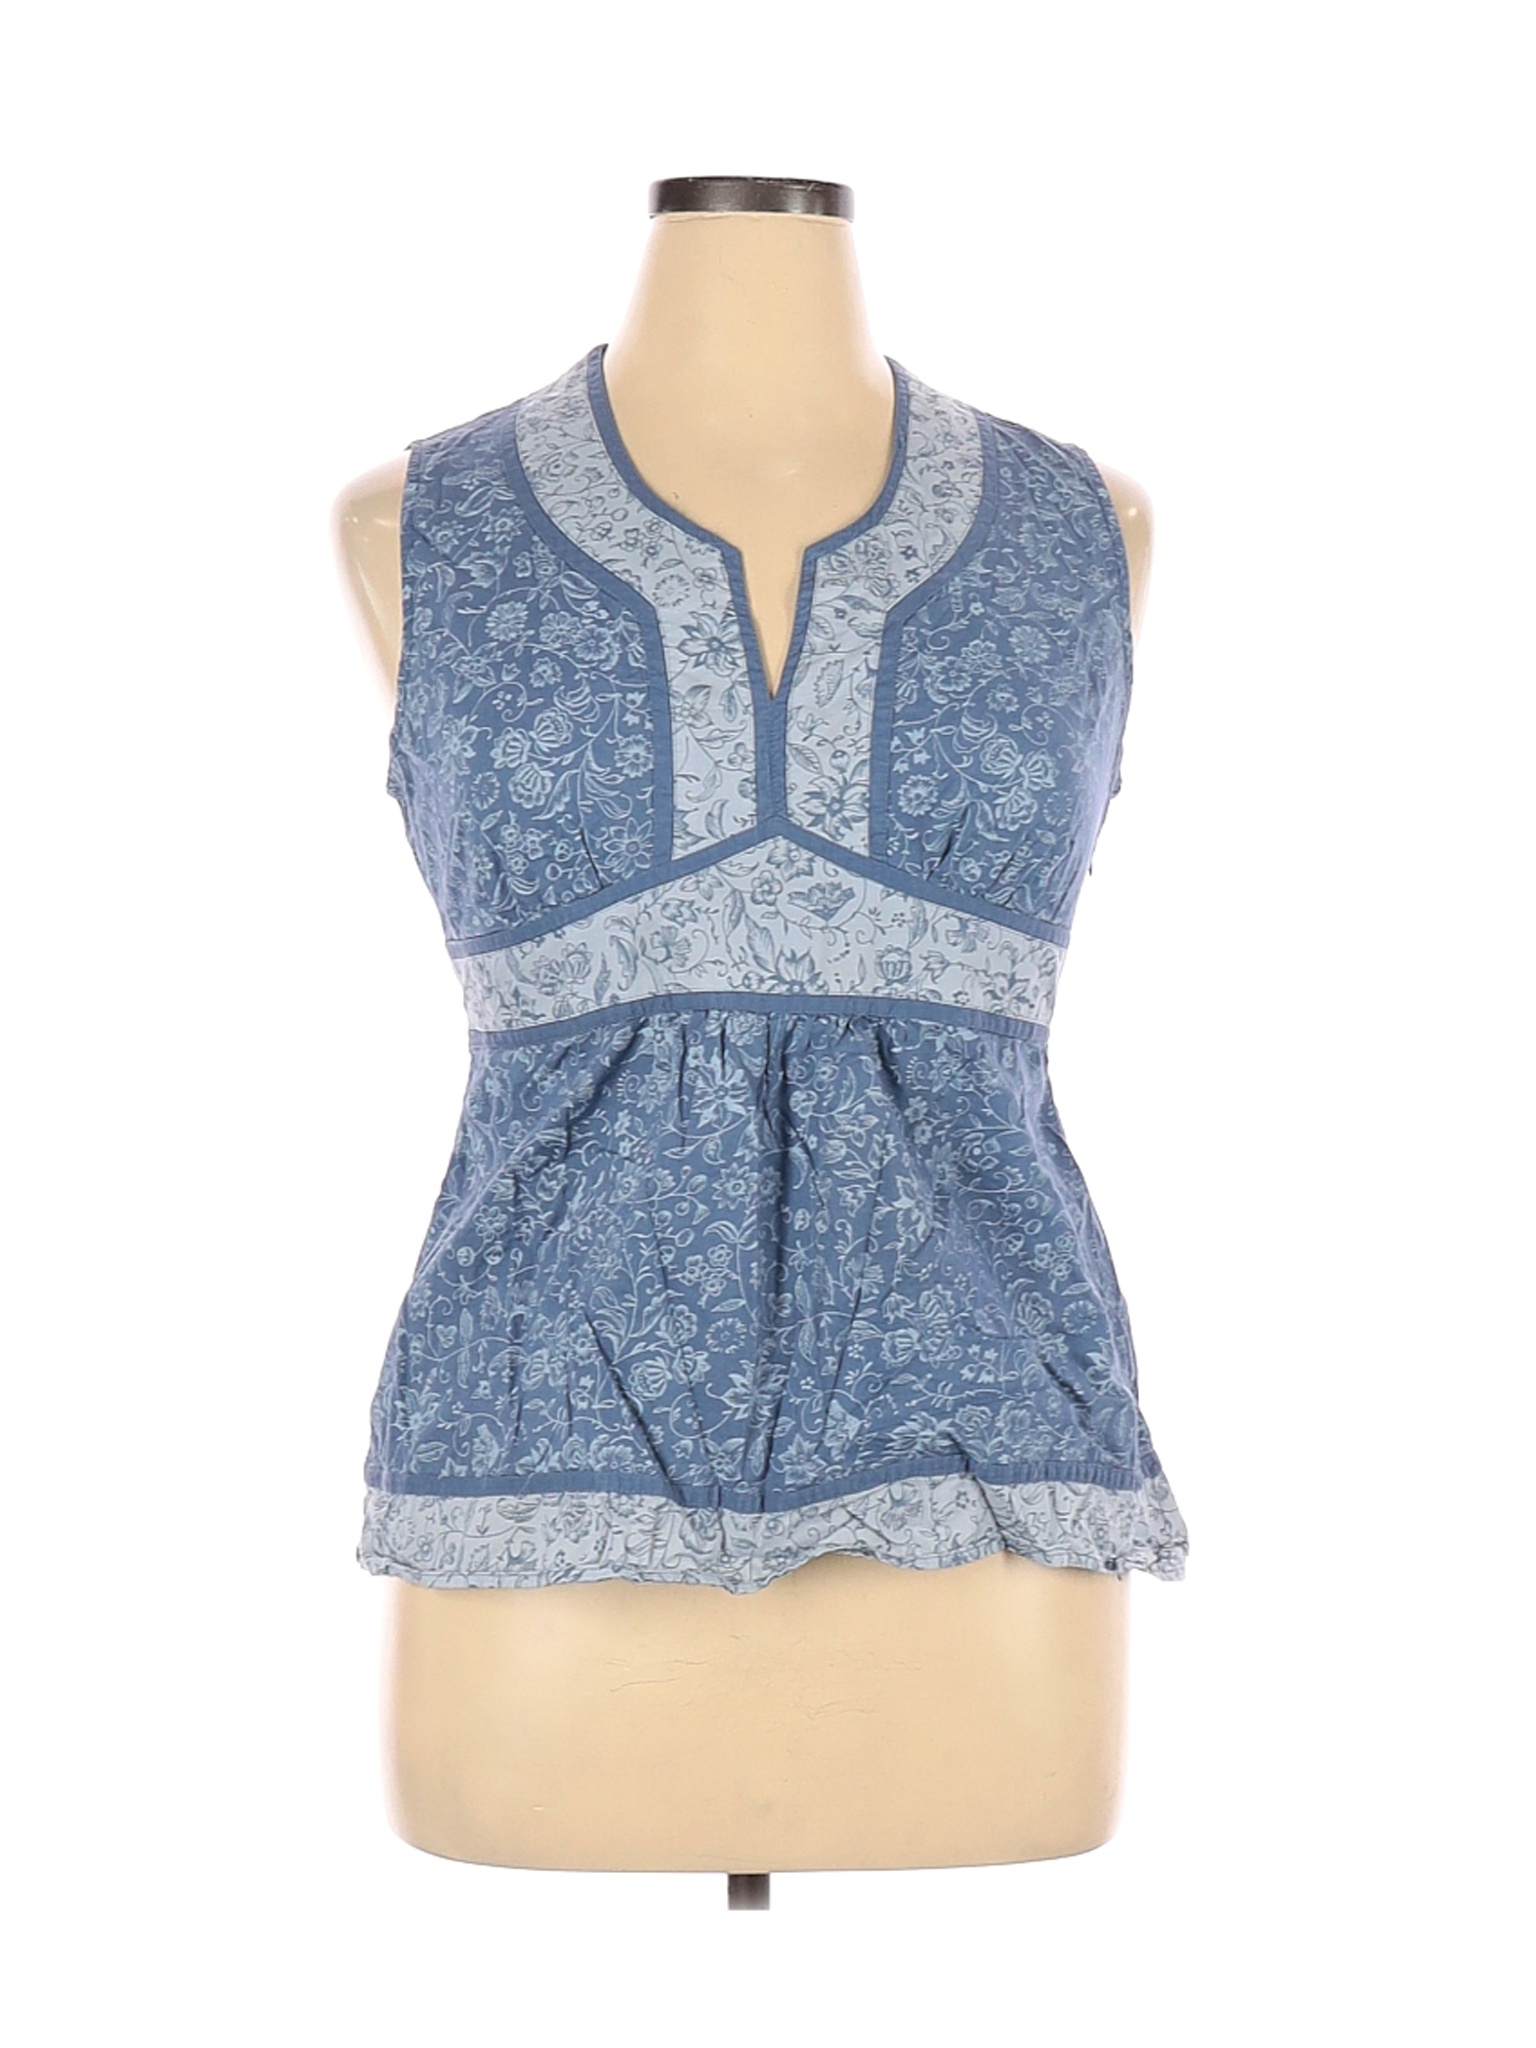 SONOMA life + style Women Blue Sleeveless Blouse XL Petites | eBay